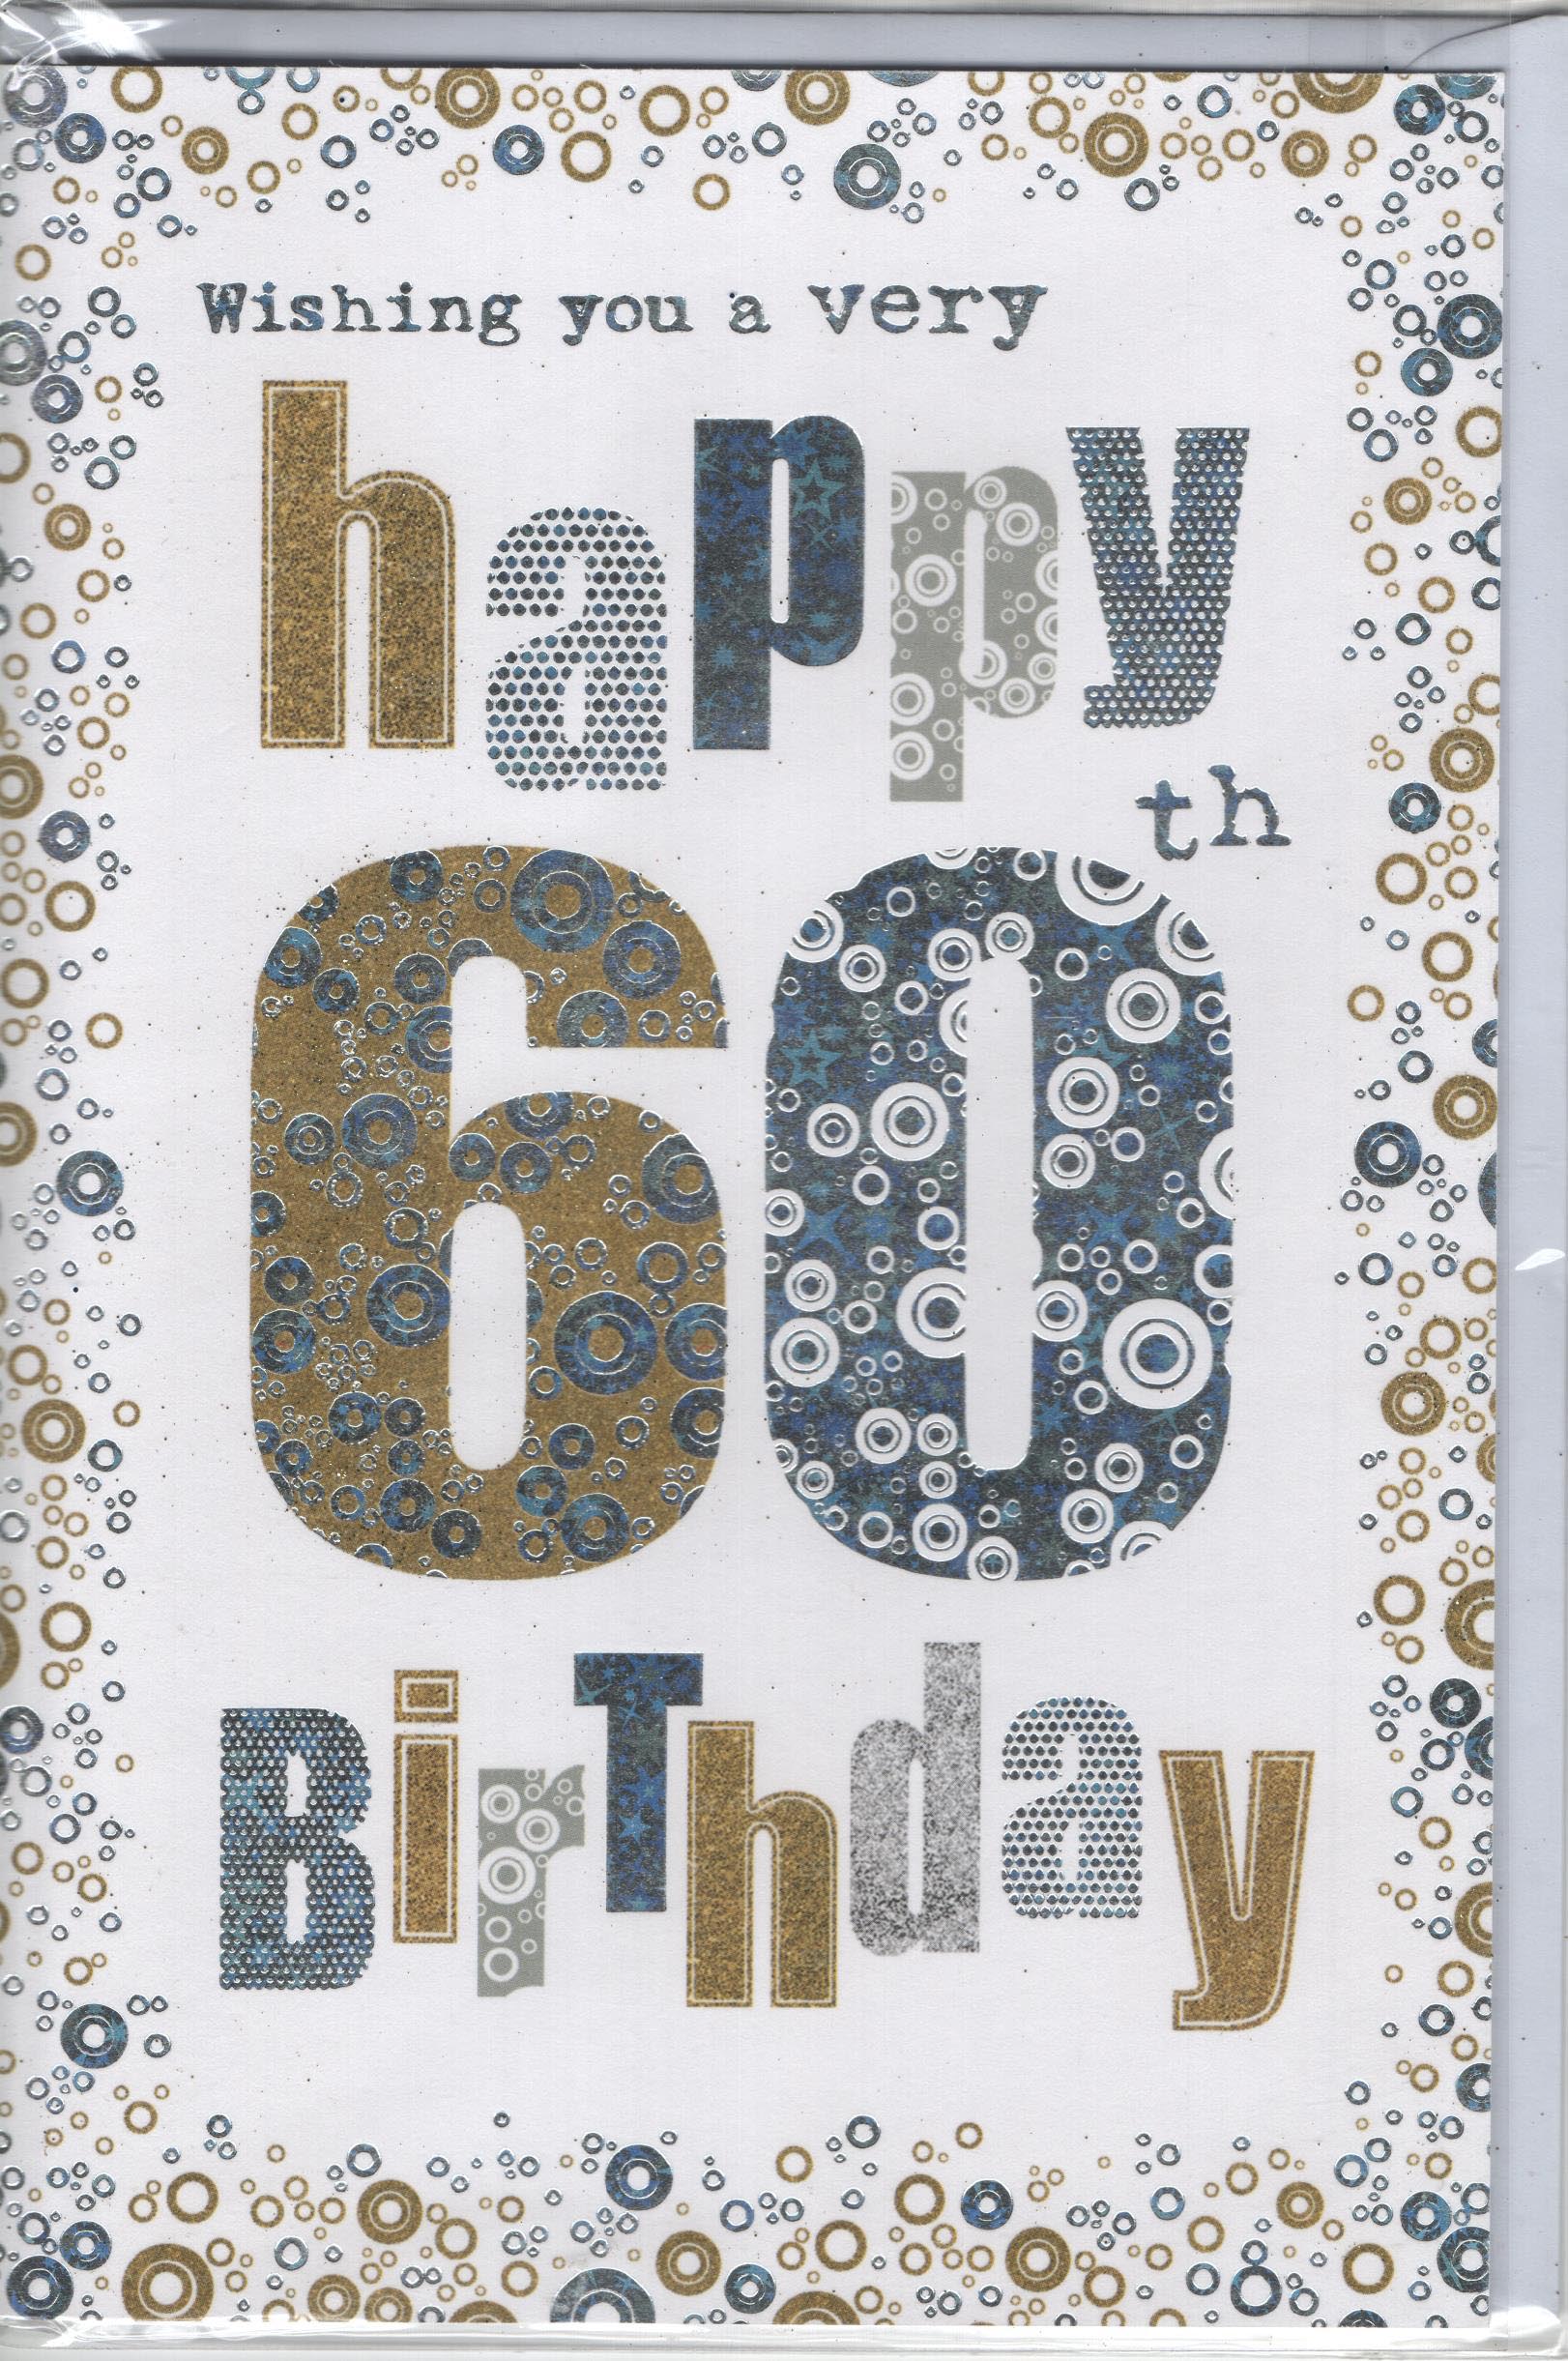 Wishing You a Very Happy 60 th Birthday